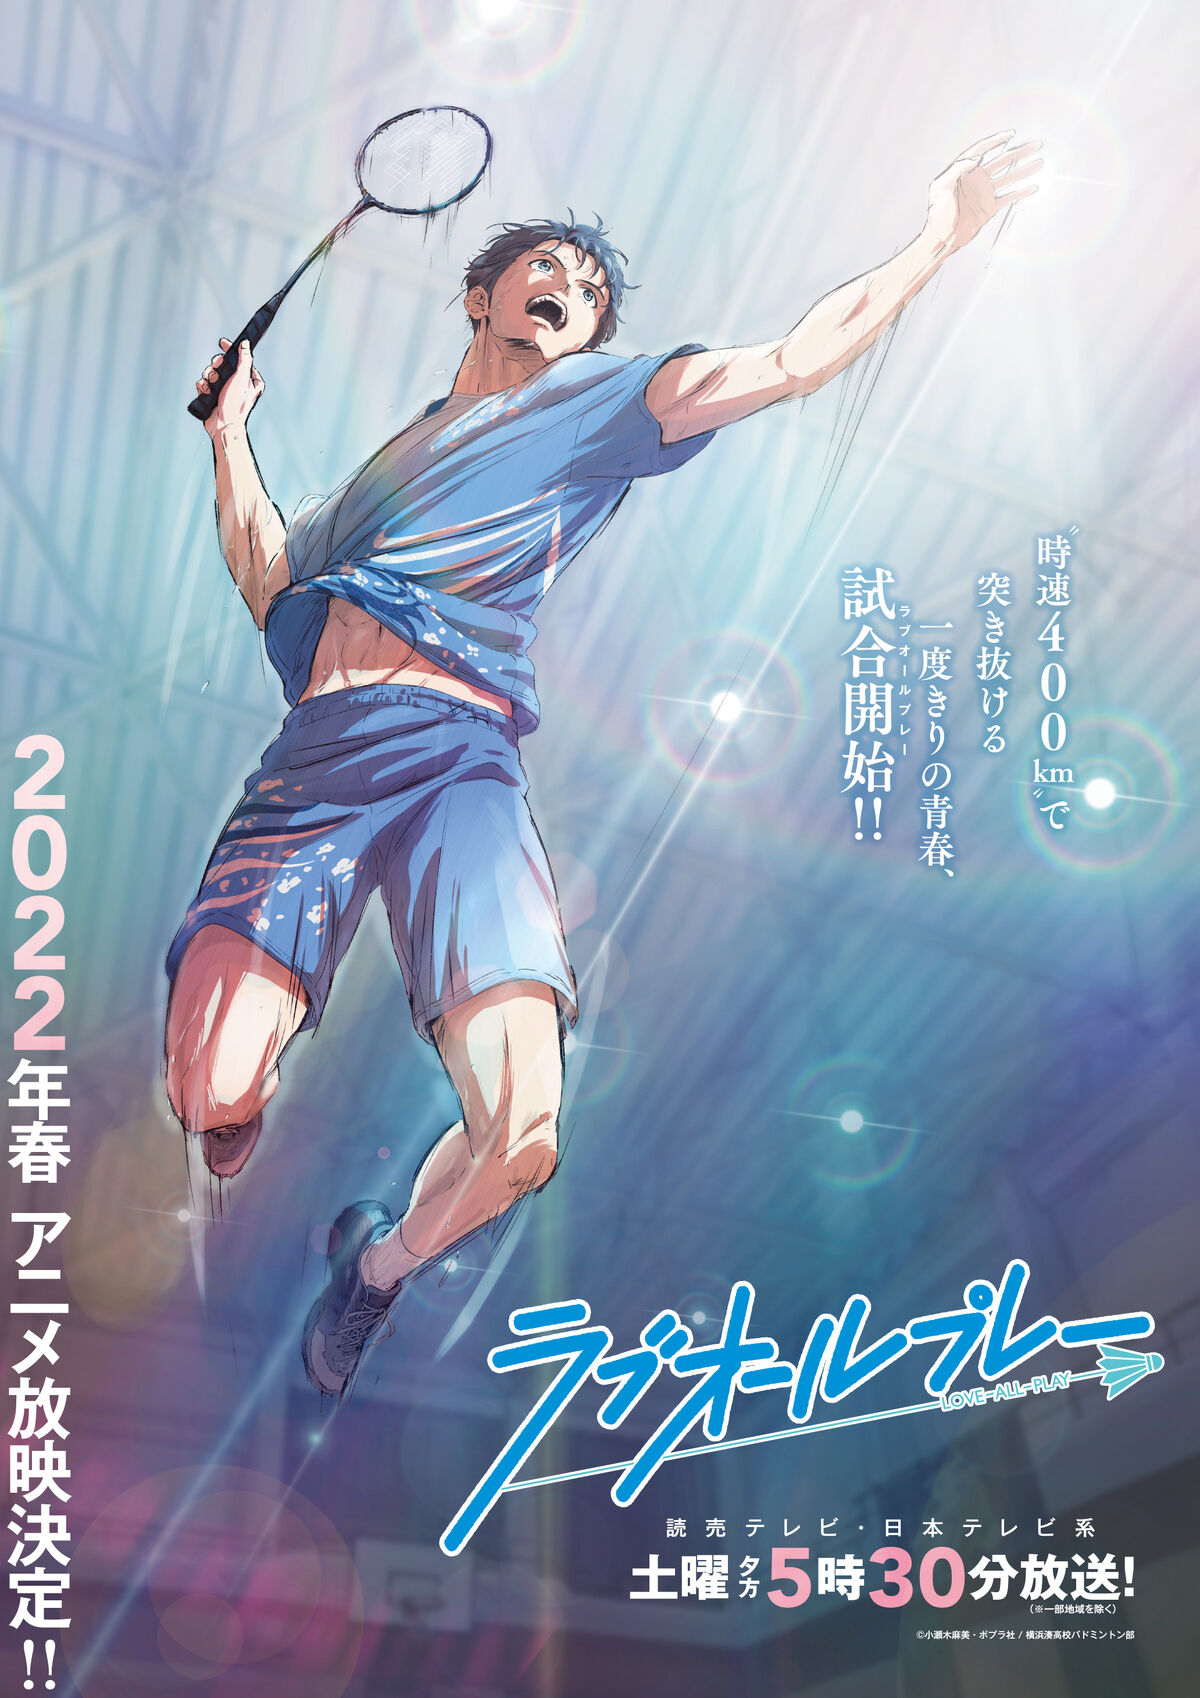 Badminton is all I need | Anime / Manga | Know Your Meme